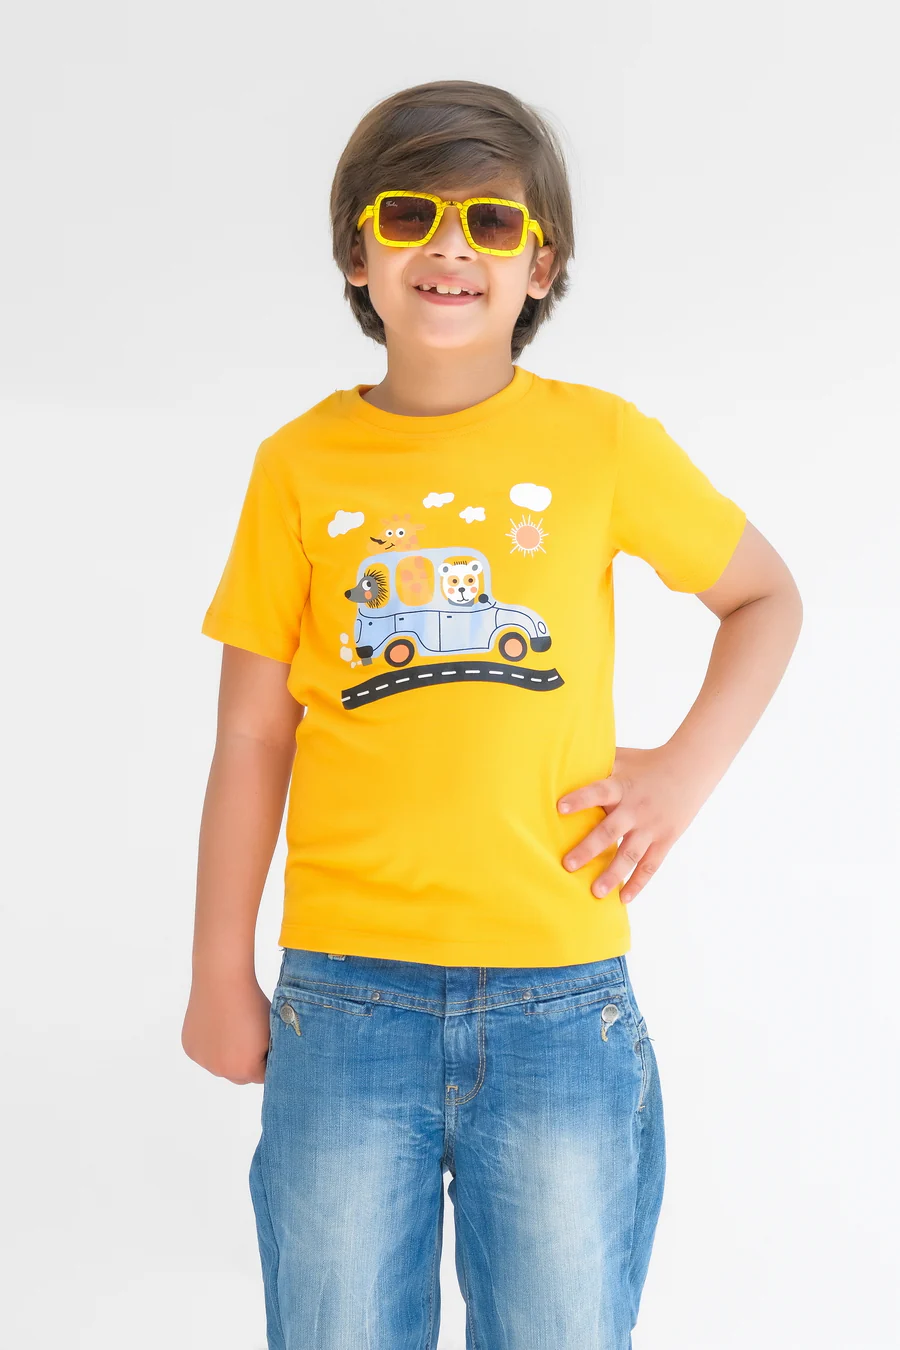 Animal Car - Half Sleeves T-Shirts For Kids - Yellow - SBT-344